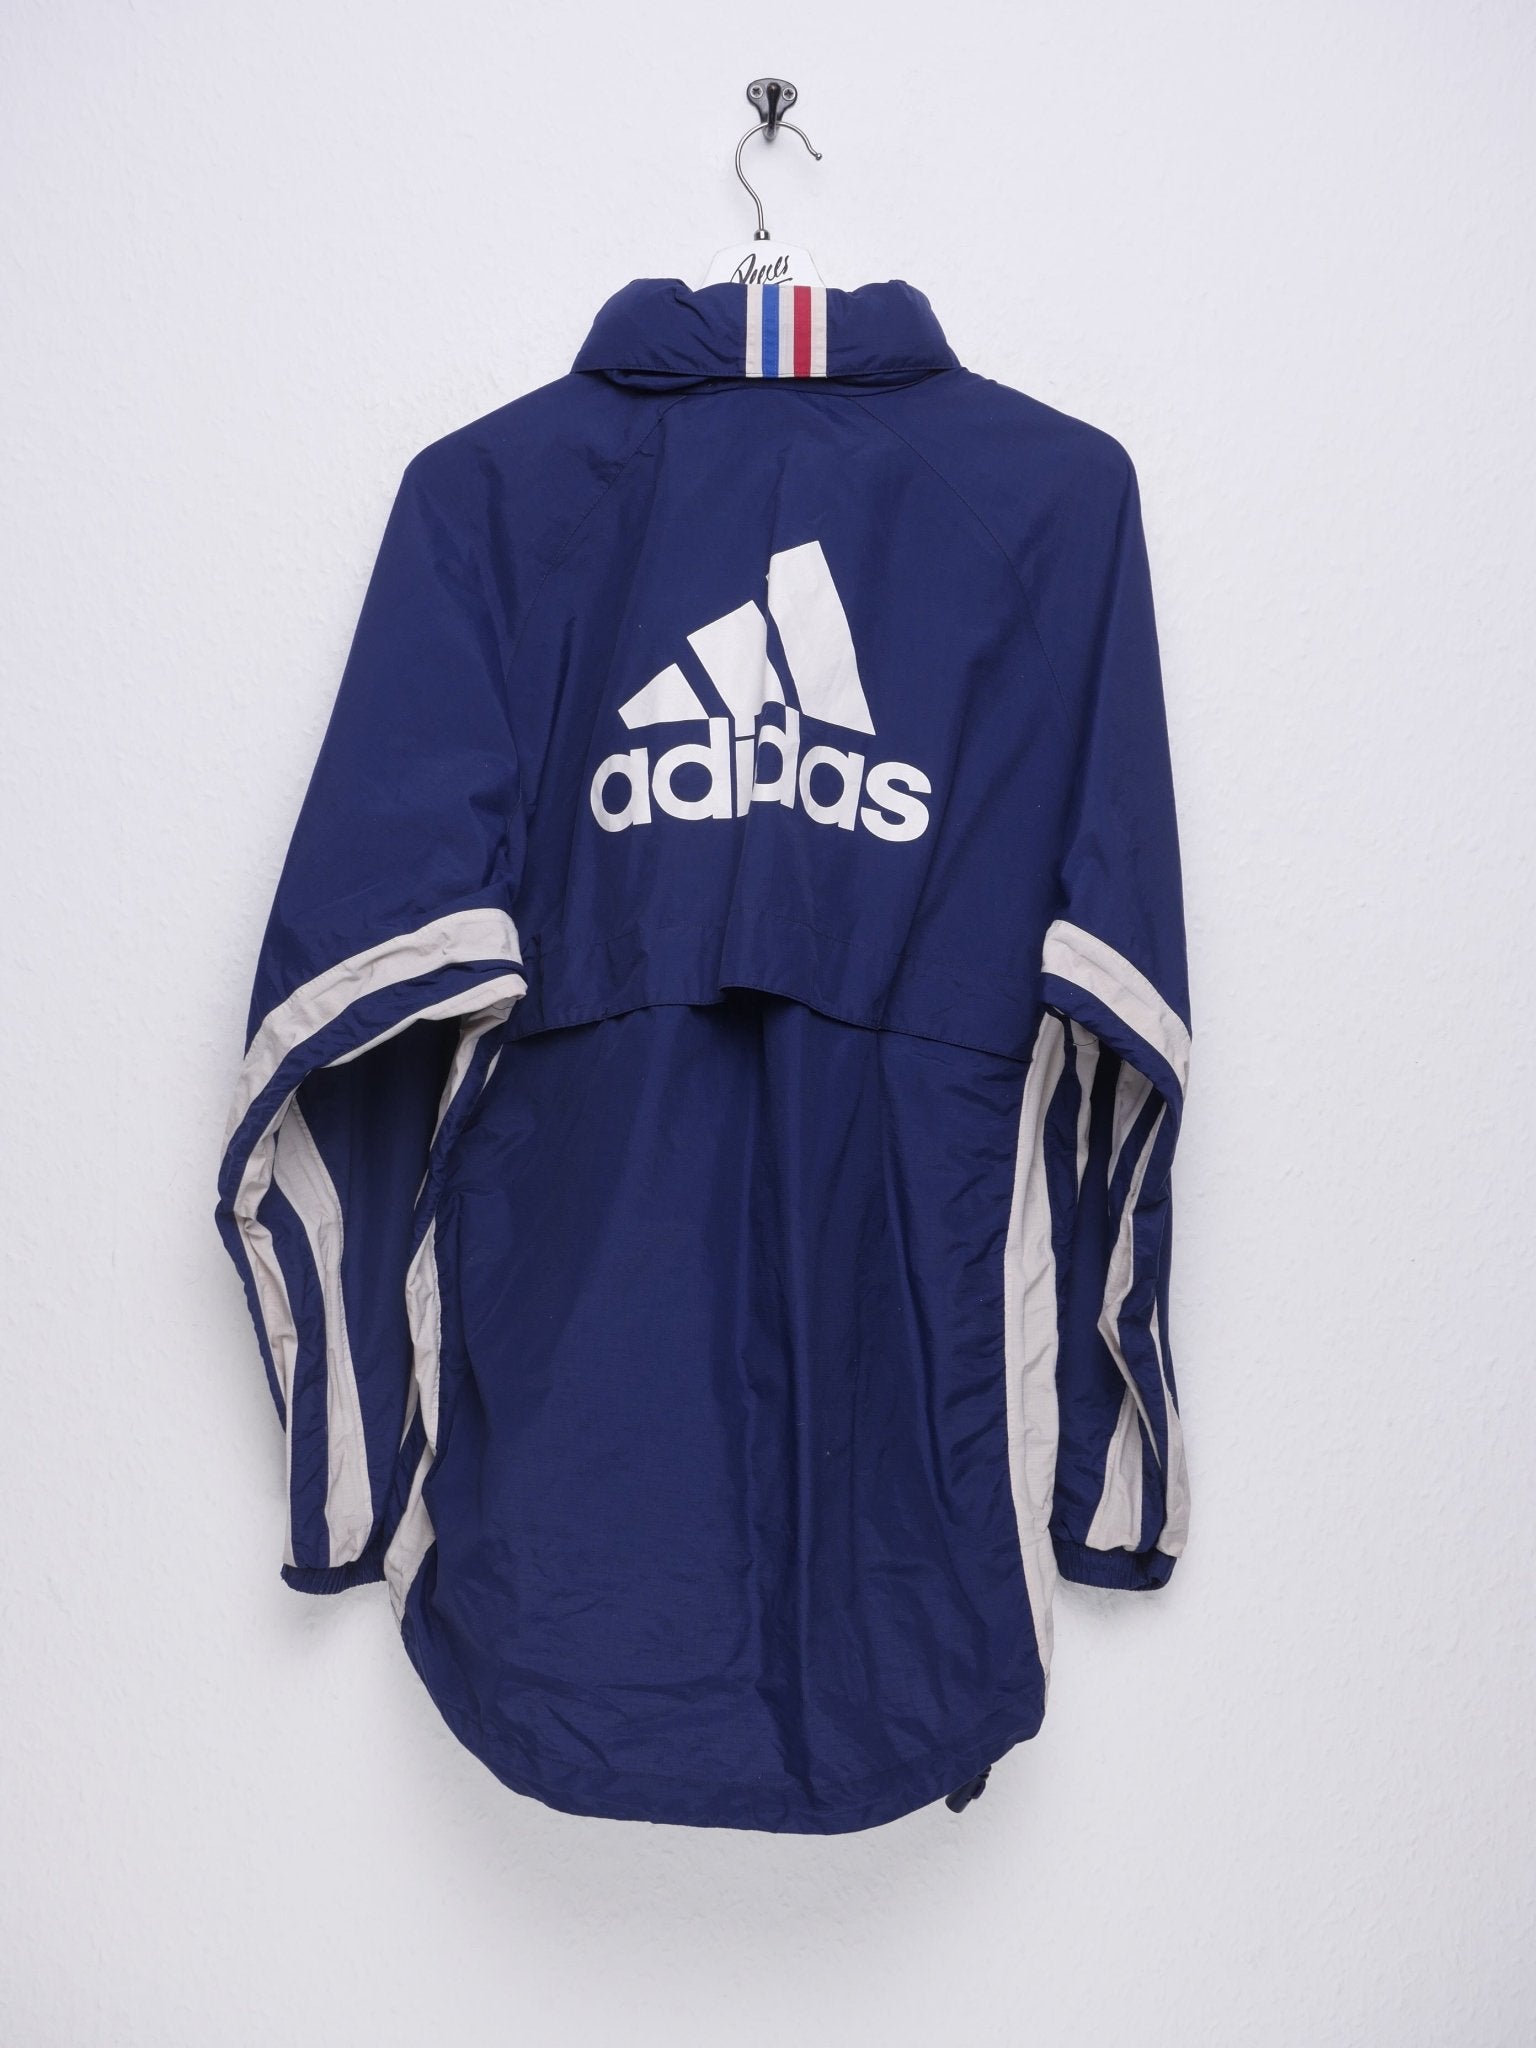 Adidas printed France Logo Vintage Track Jacke - Peeces